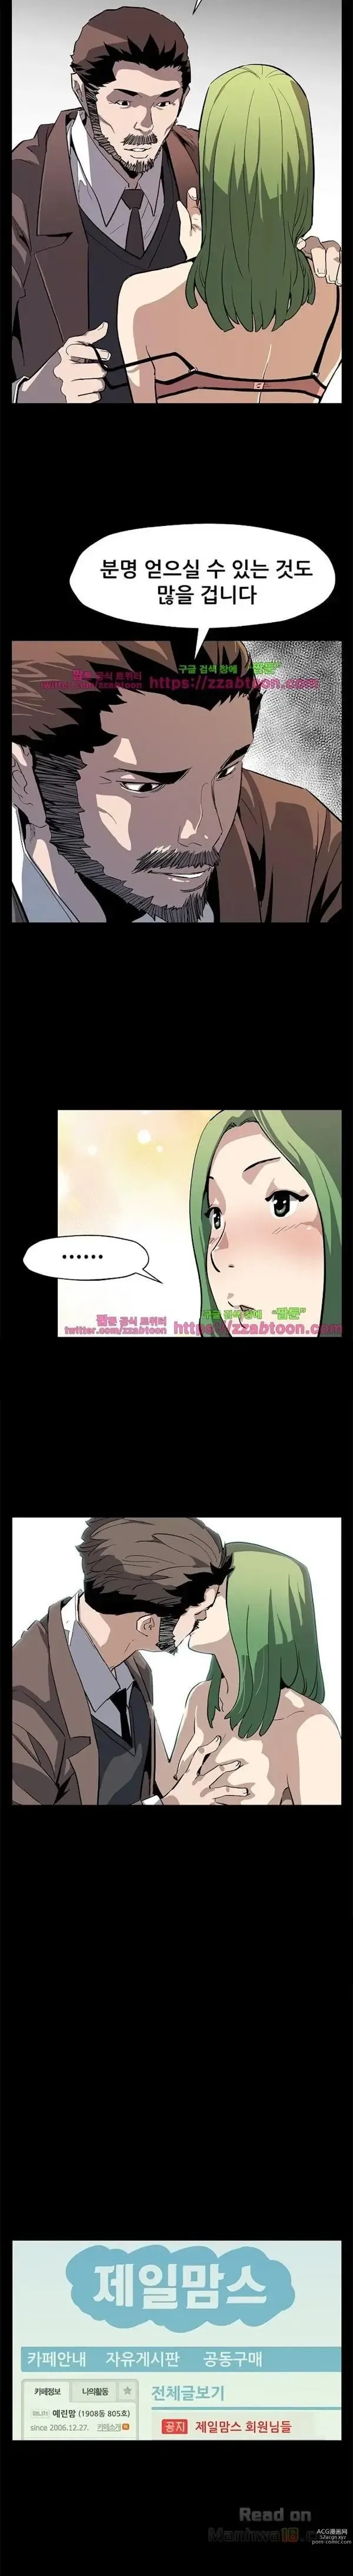 Page 782 of manga Moms Cafe 11 - 72